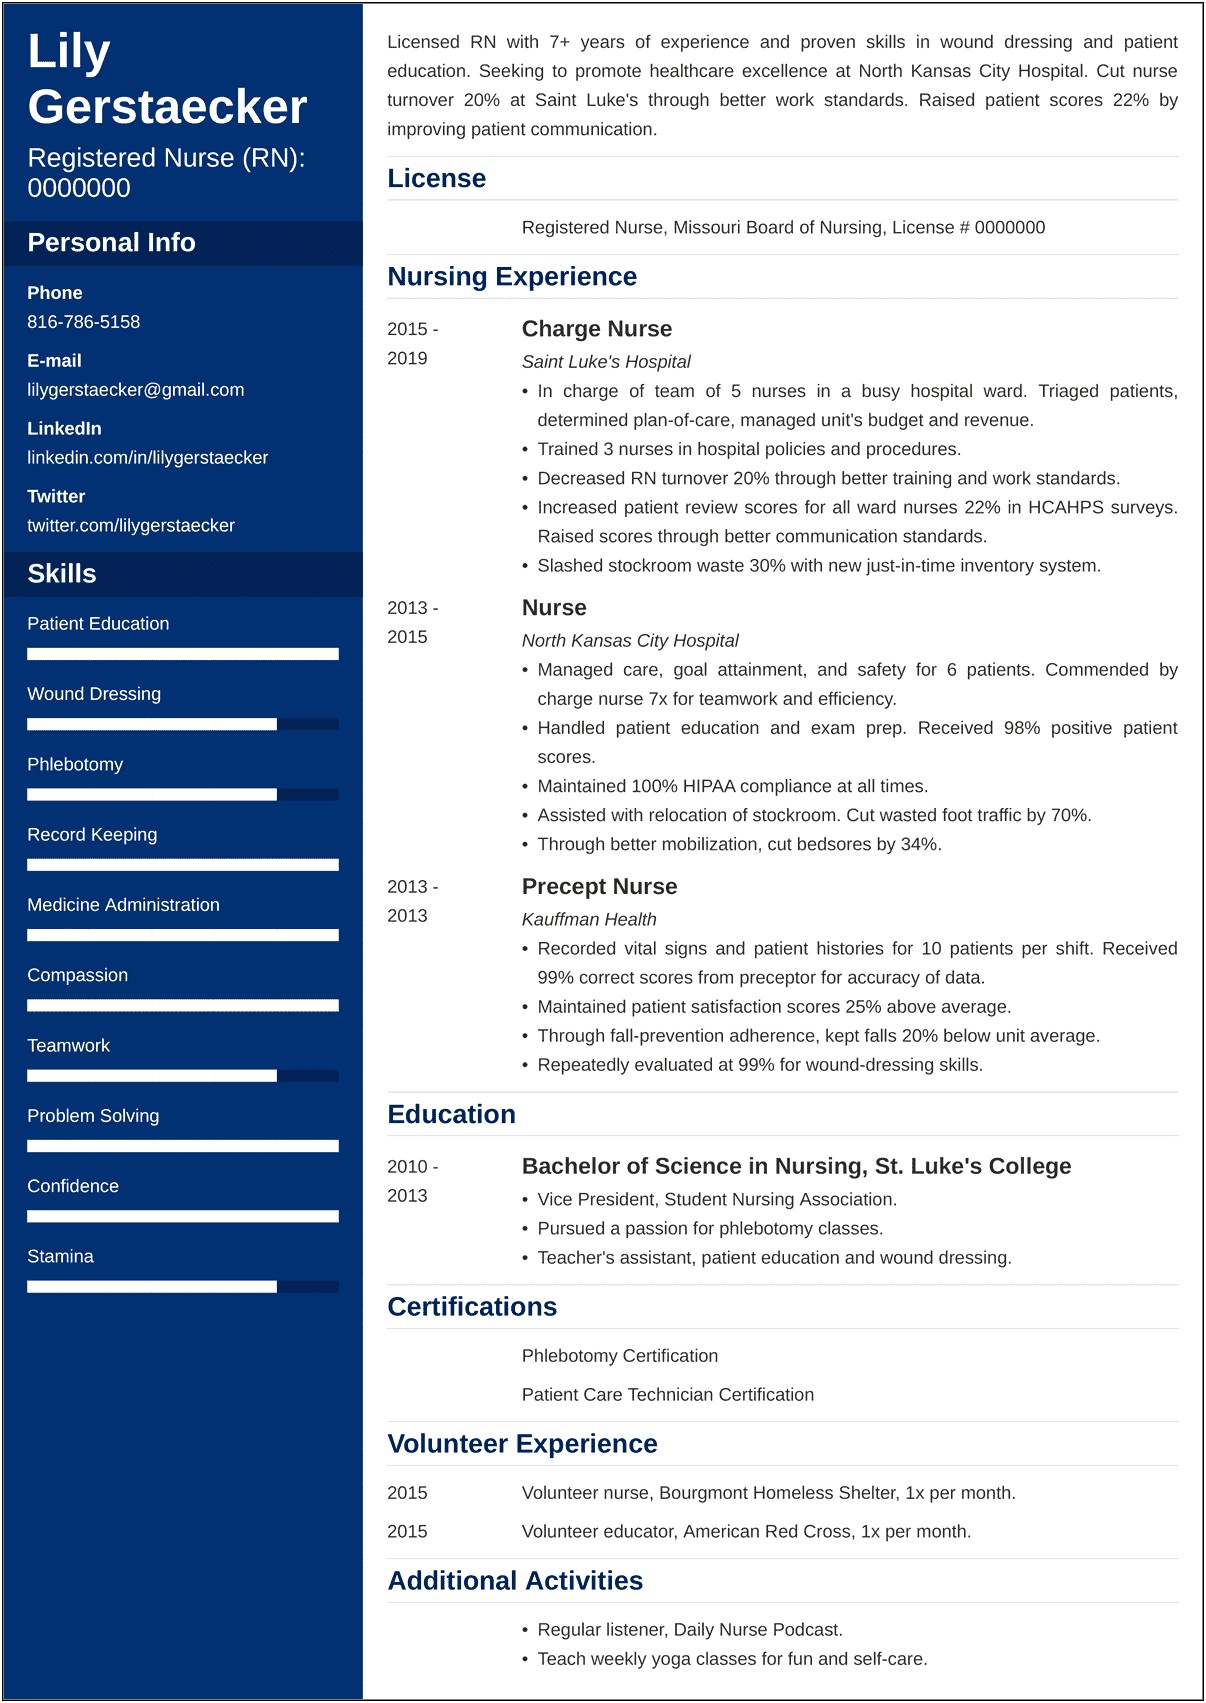 Nursing Job Related Training Examples For Resume